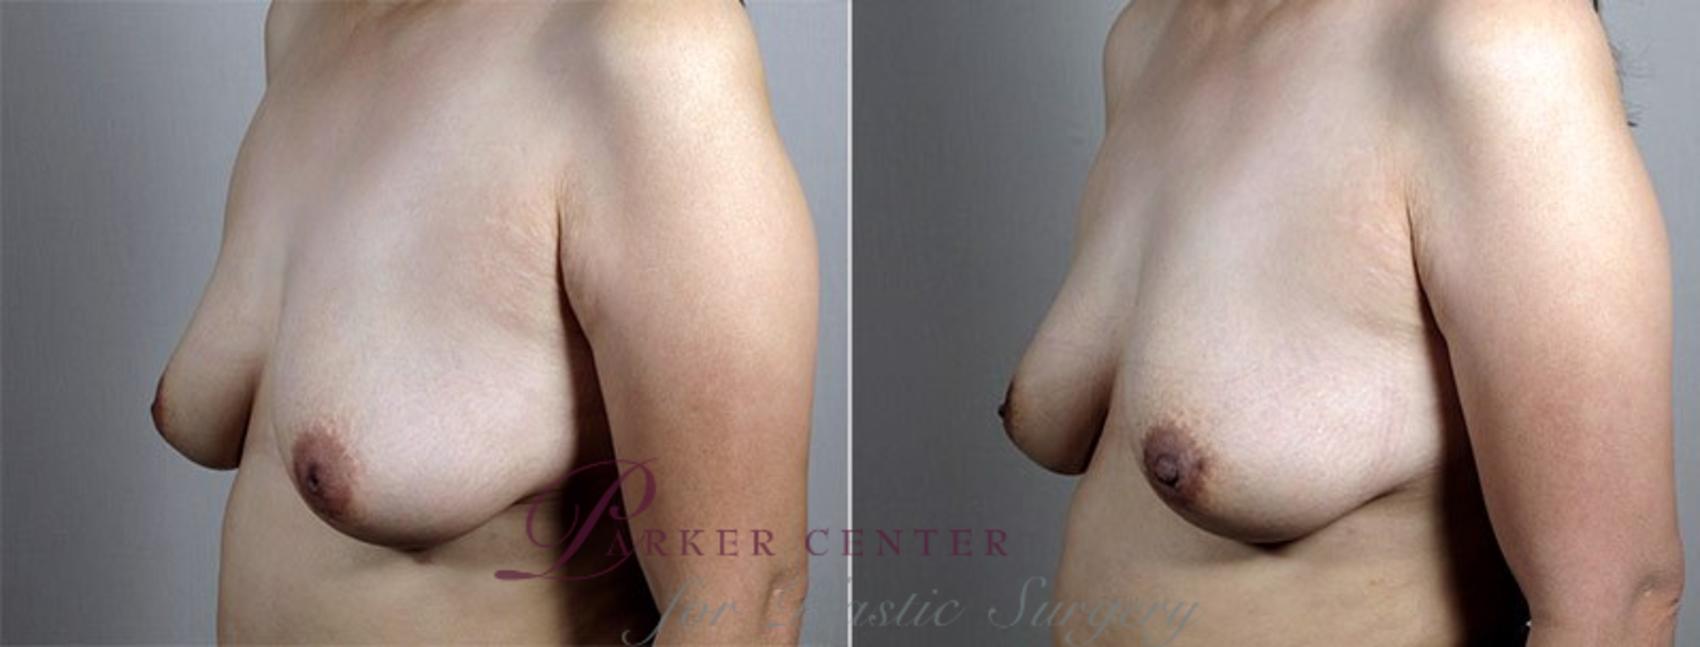 Nipple Procedures Case 568 Before & After View #1 | Paramus, NJ | Parker Center for Plastic Surgery